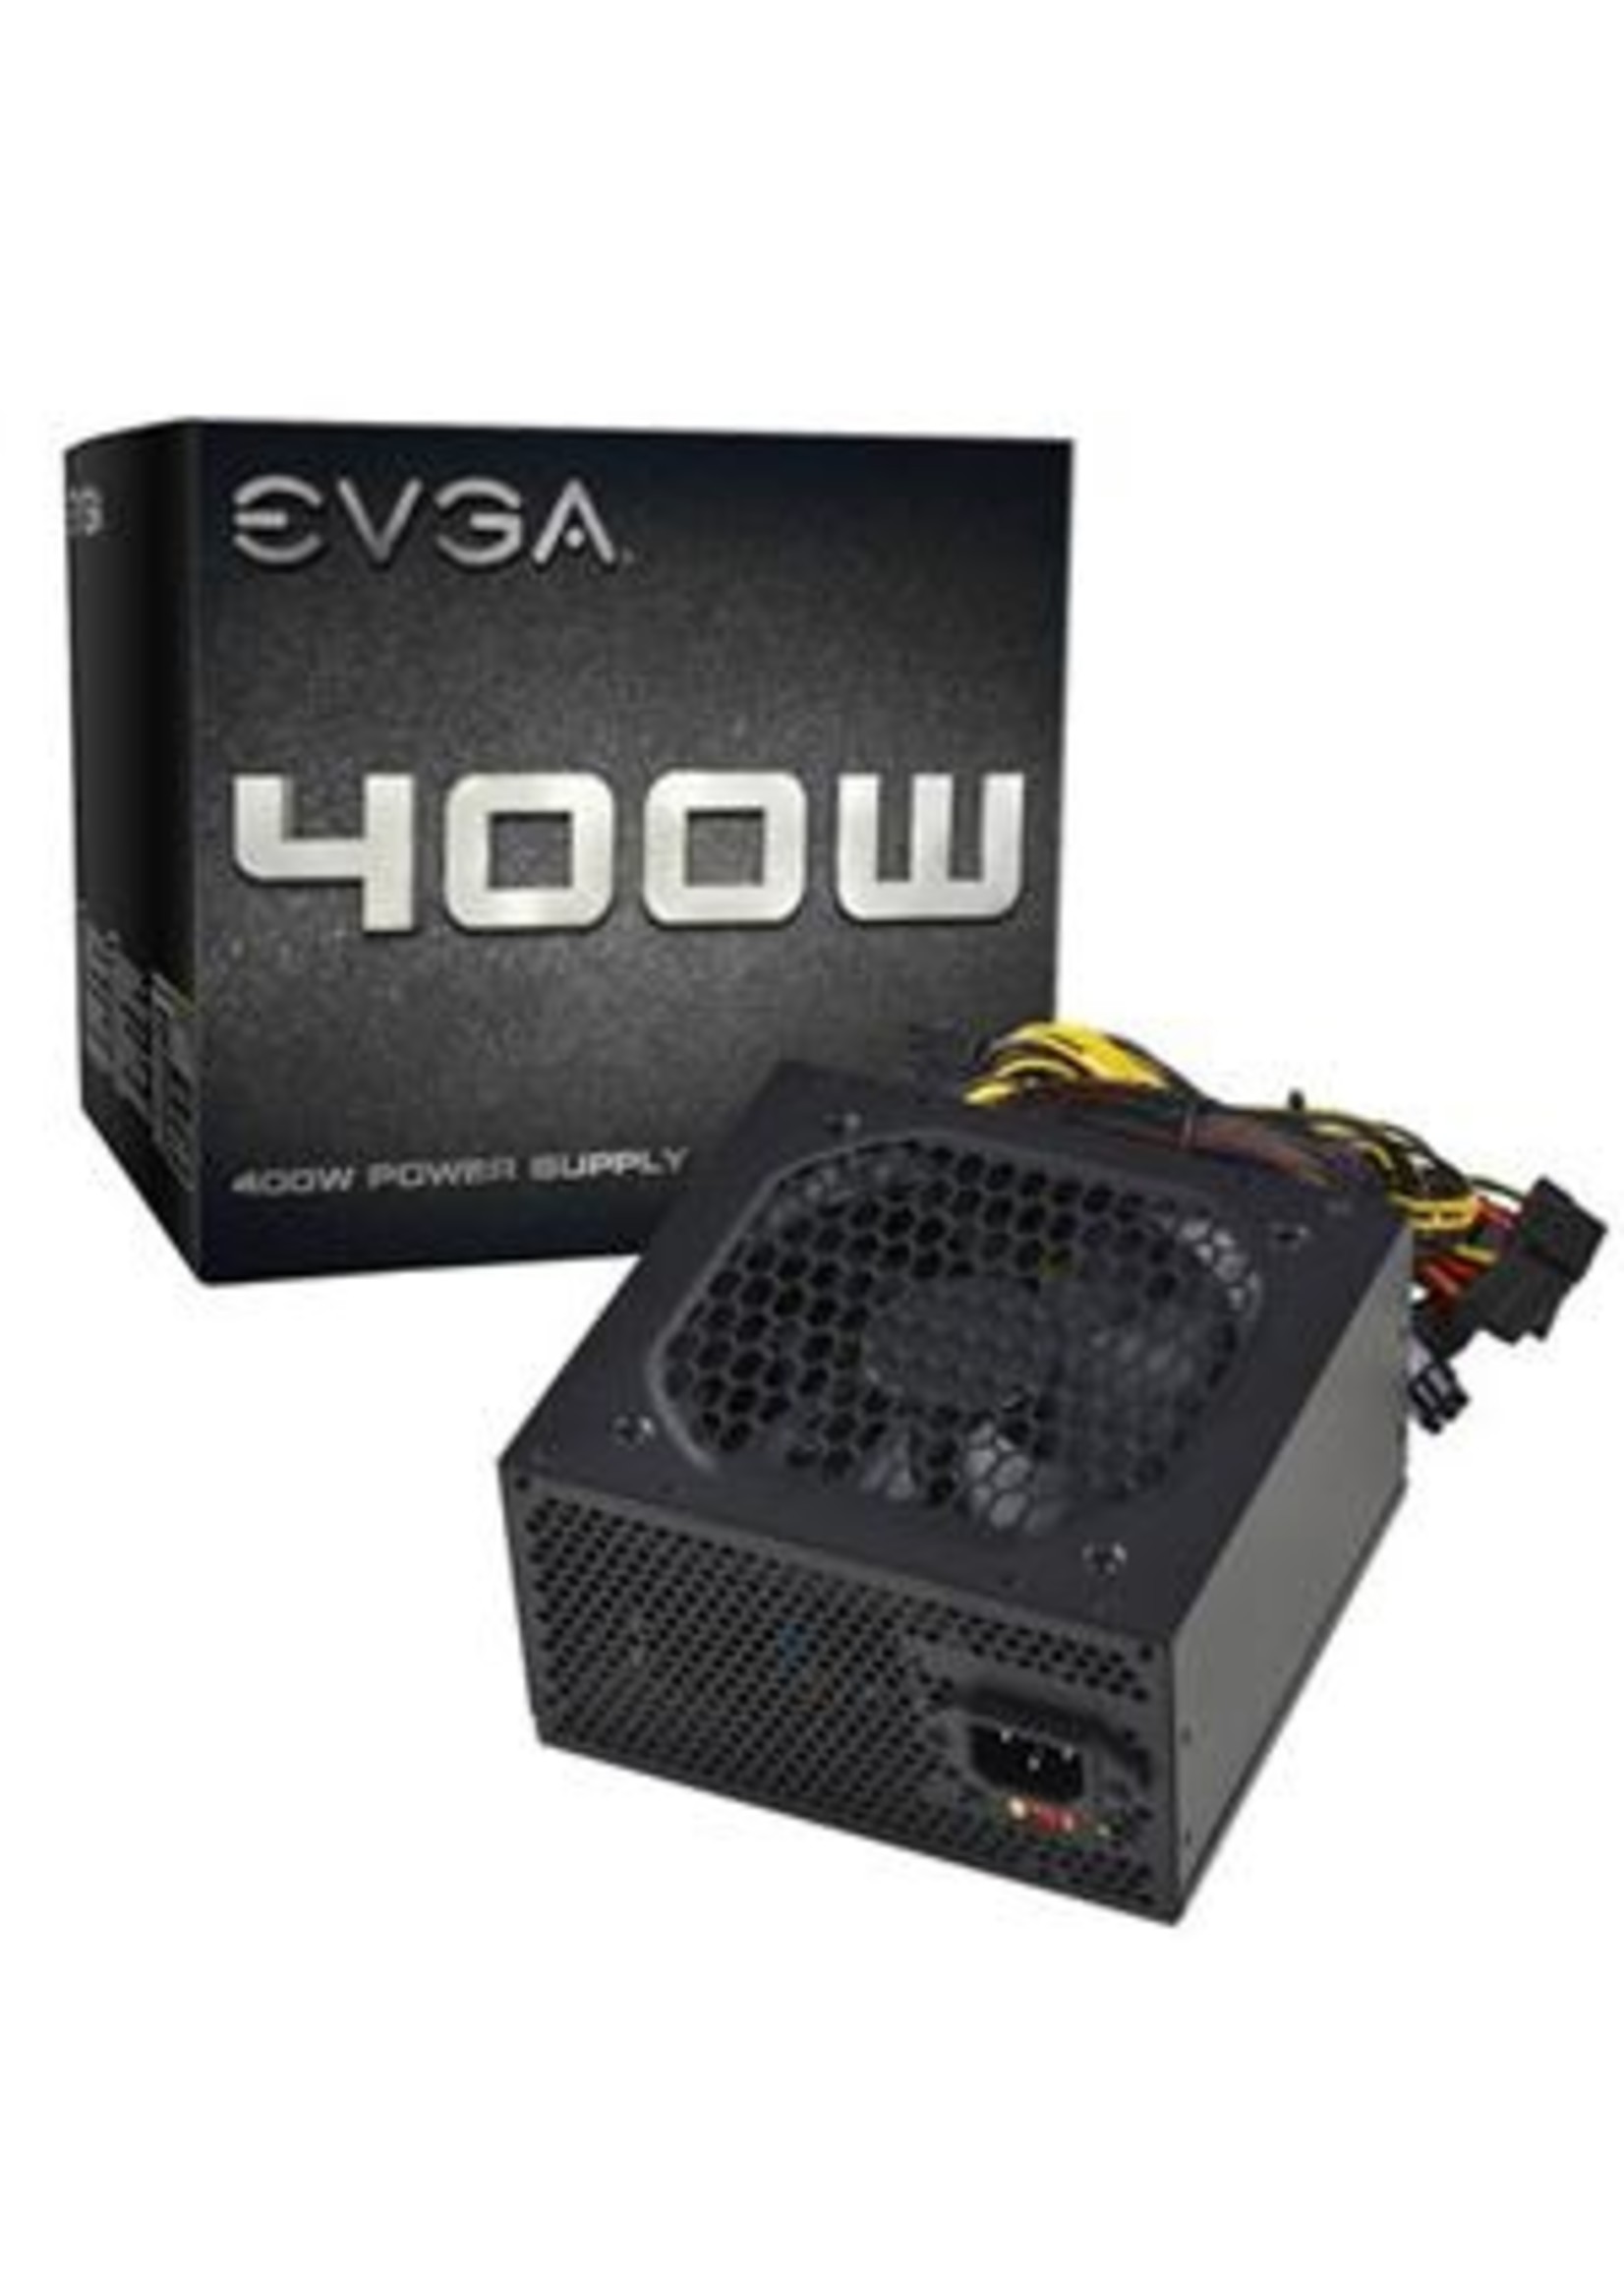 EVGA EVGA 400W Power Supply